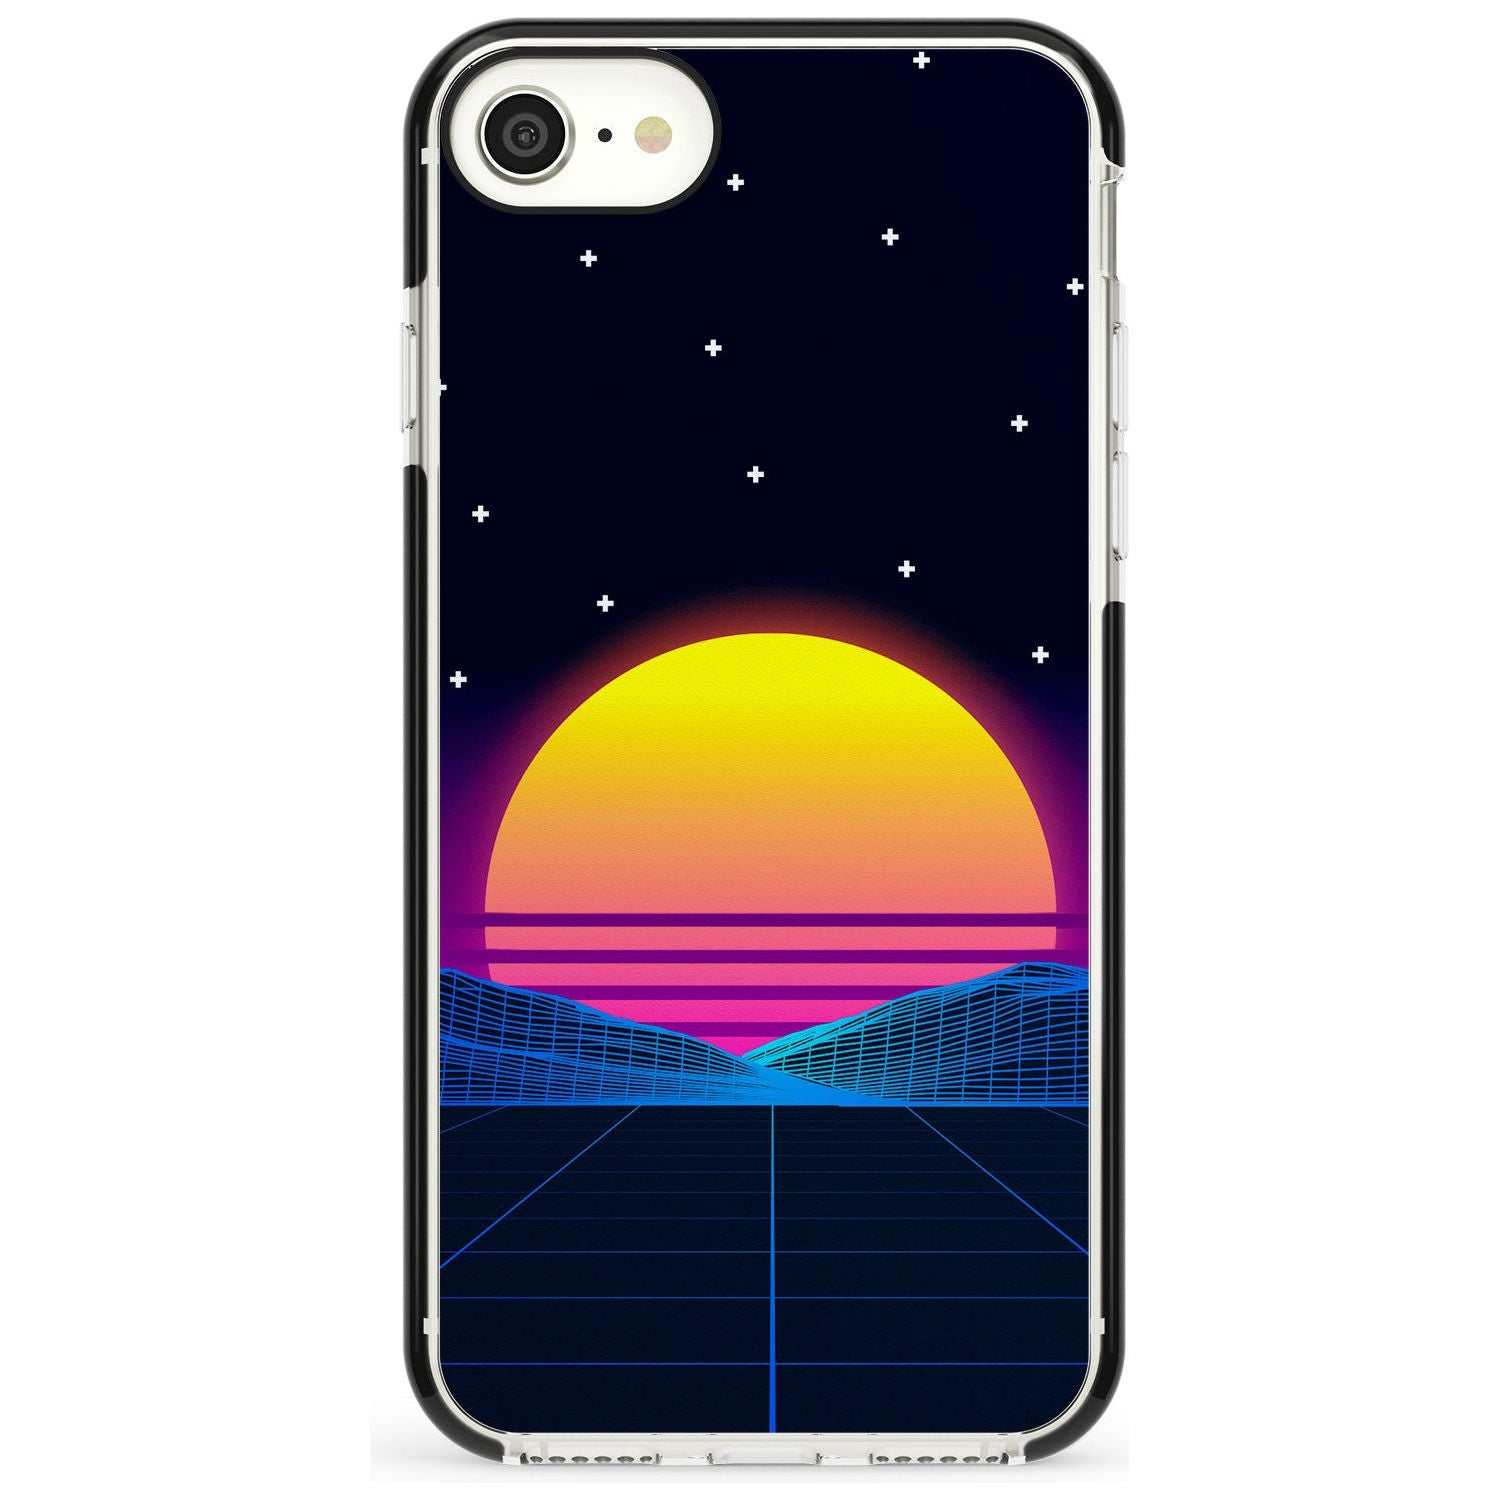 Retro Sunset Vaporwave Black Impact Phone Case for iPhone SE 8 7 Plus